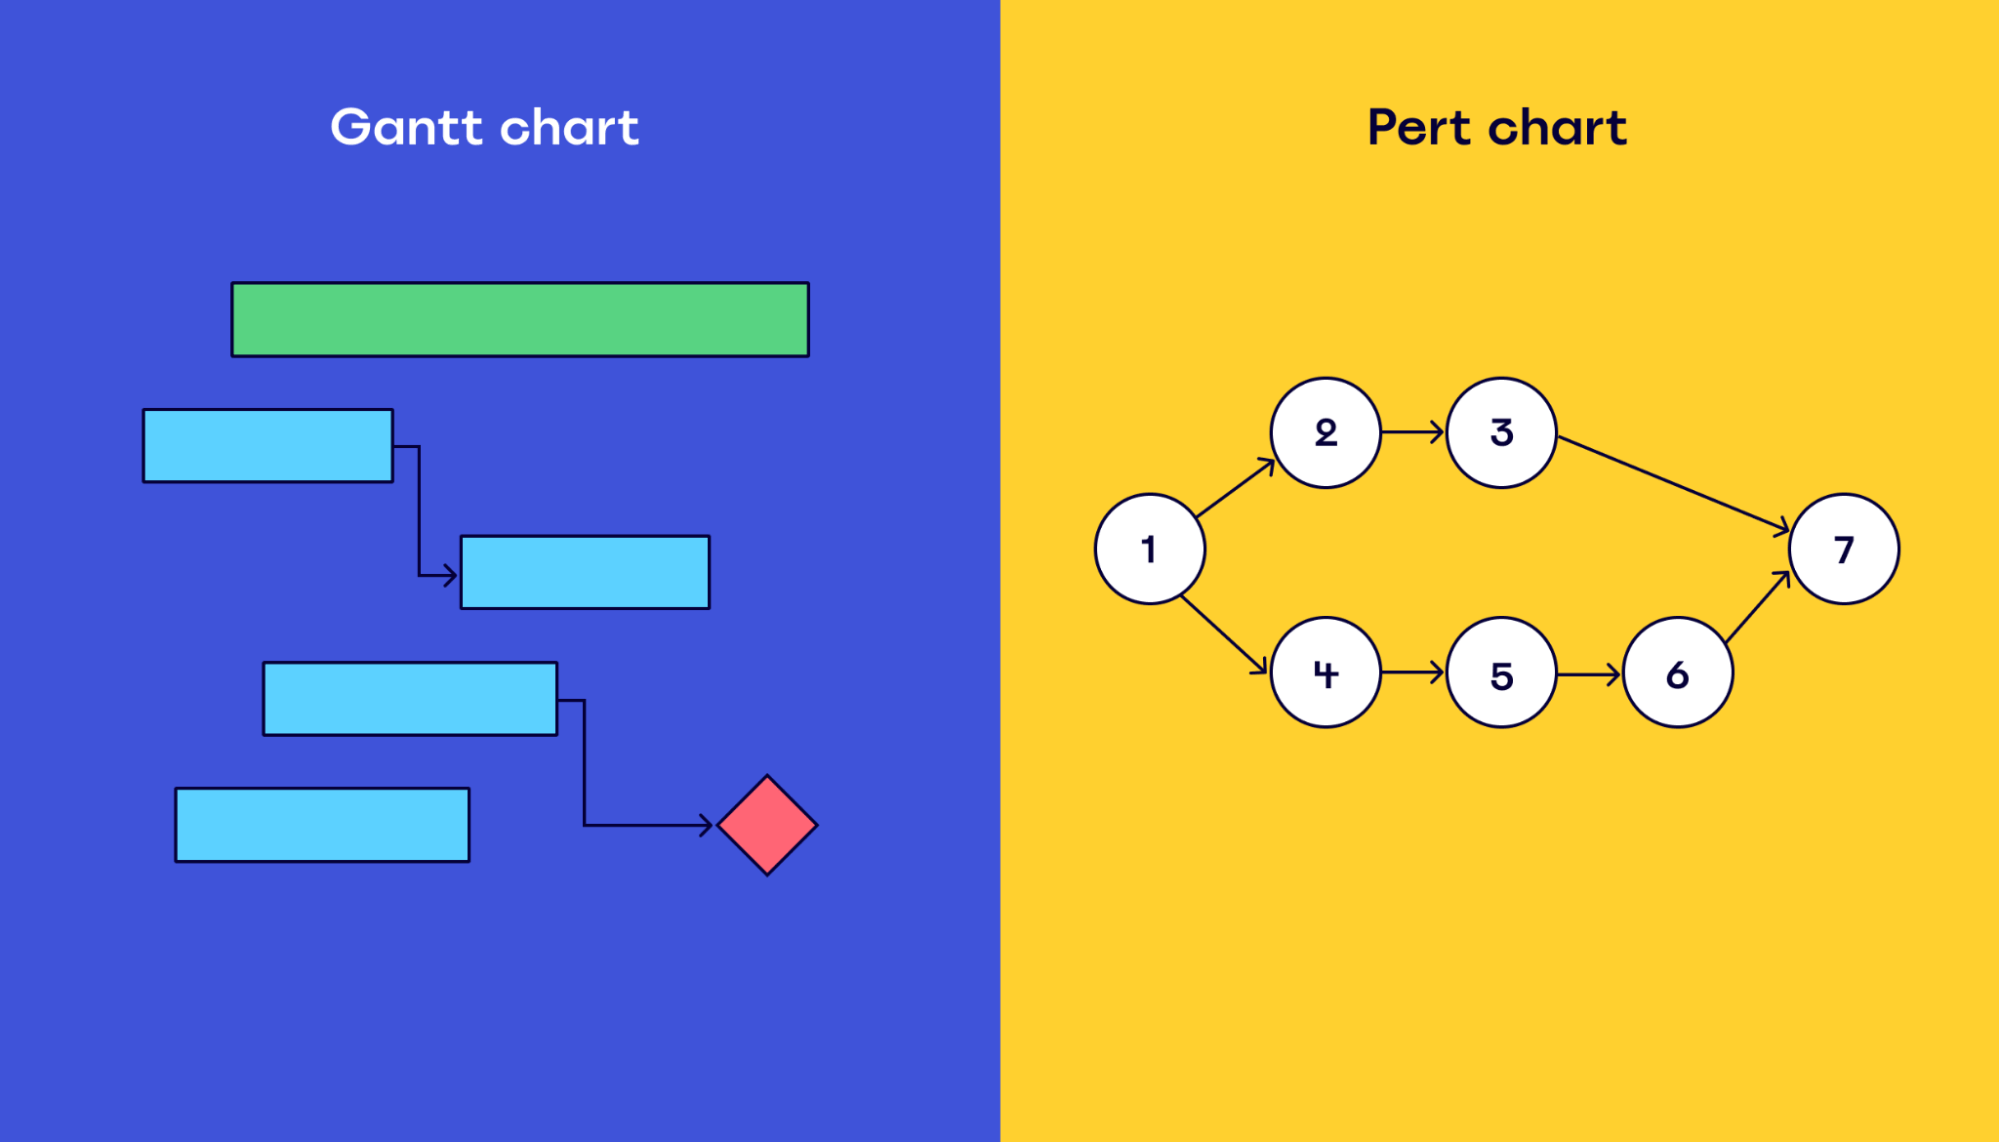 Gantt chart vs. PERT chart